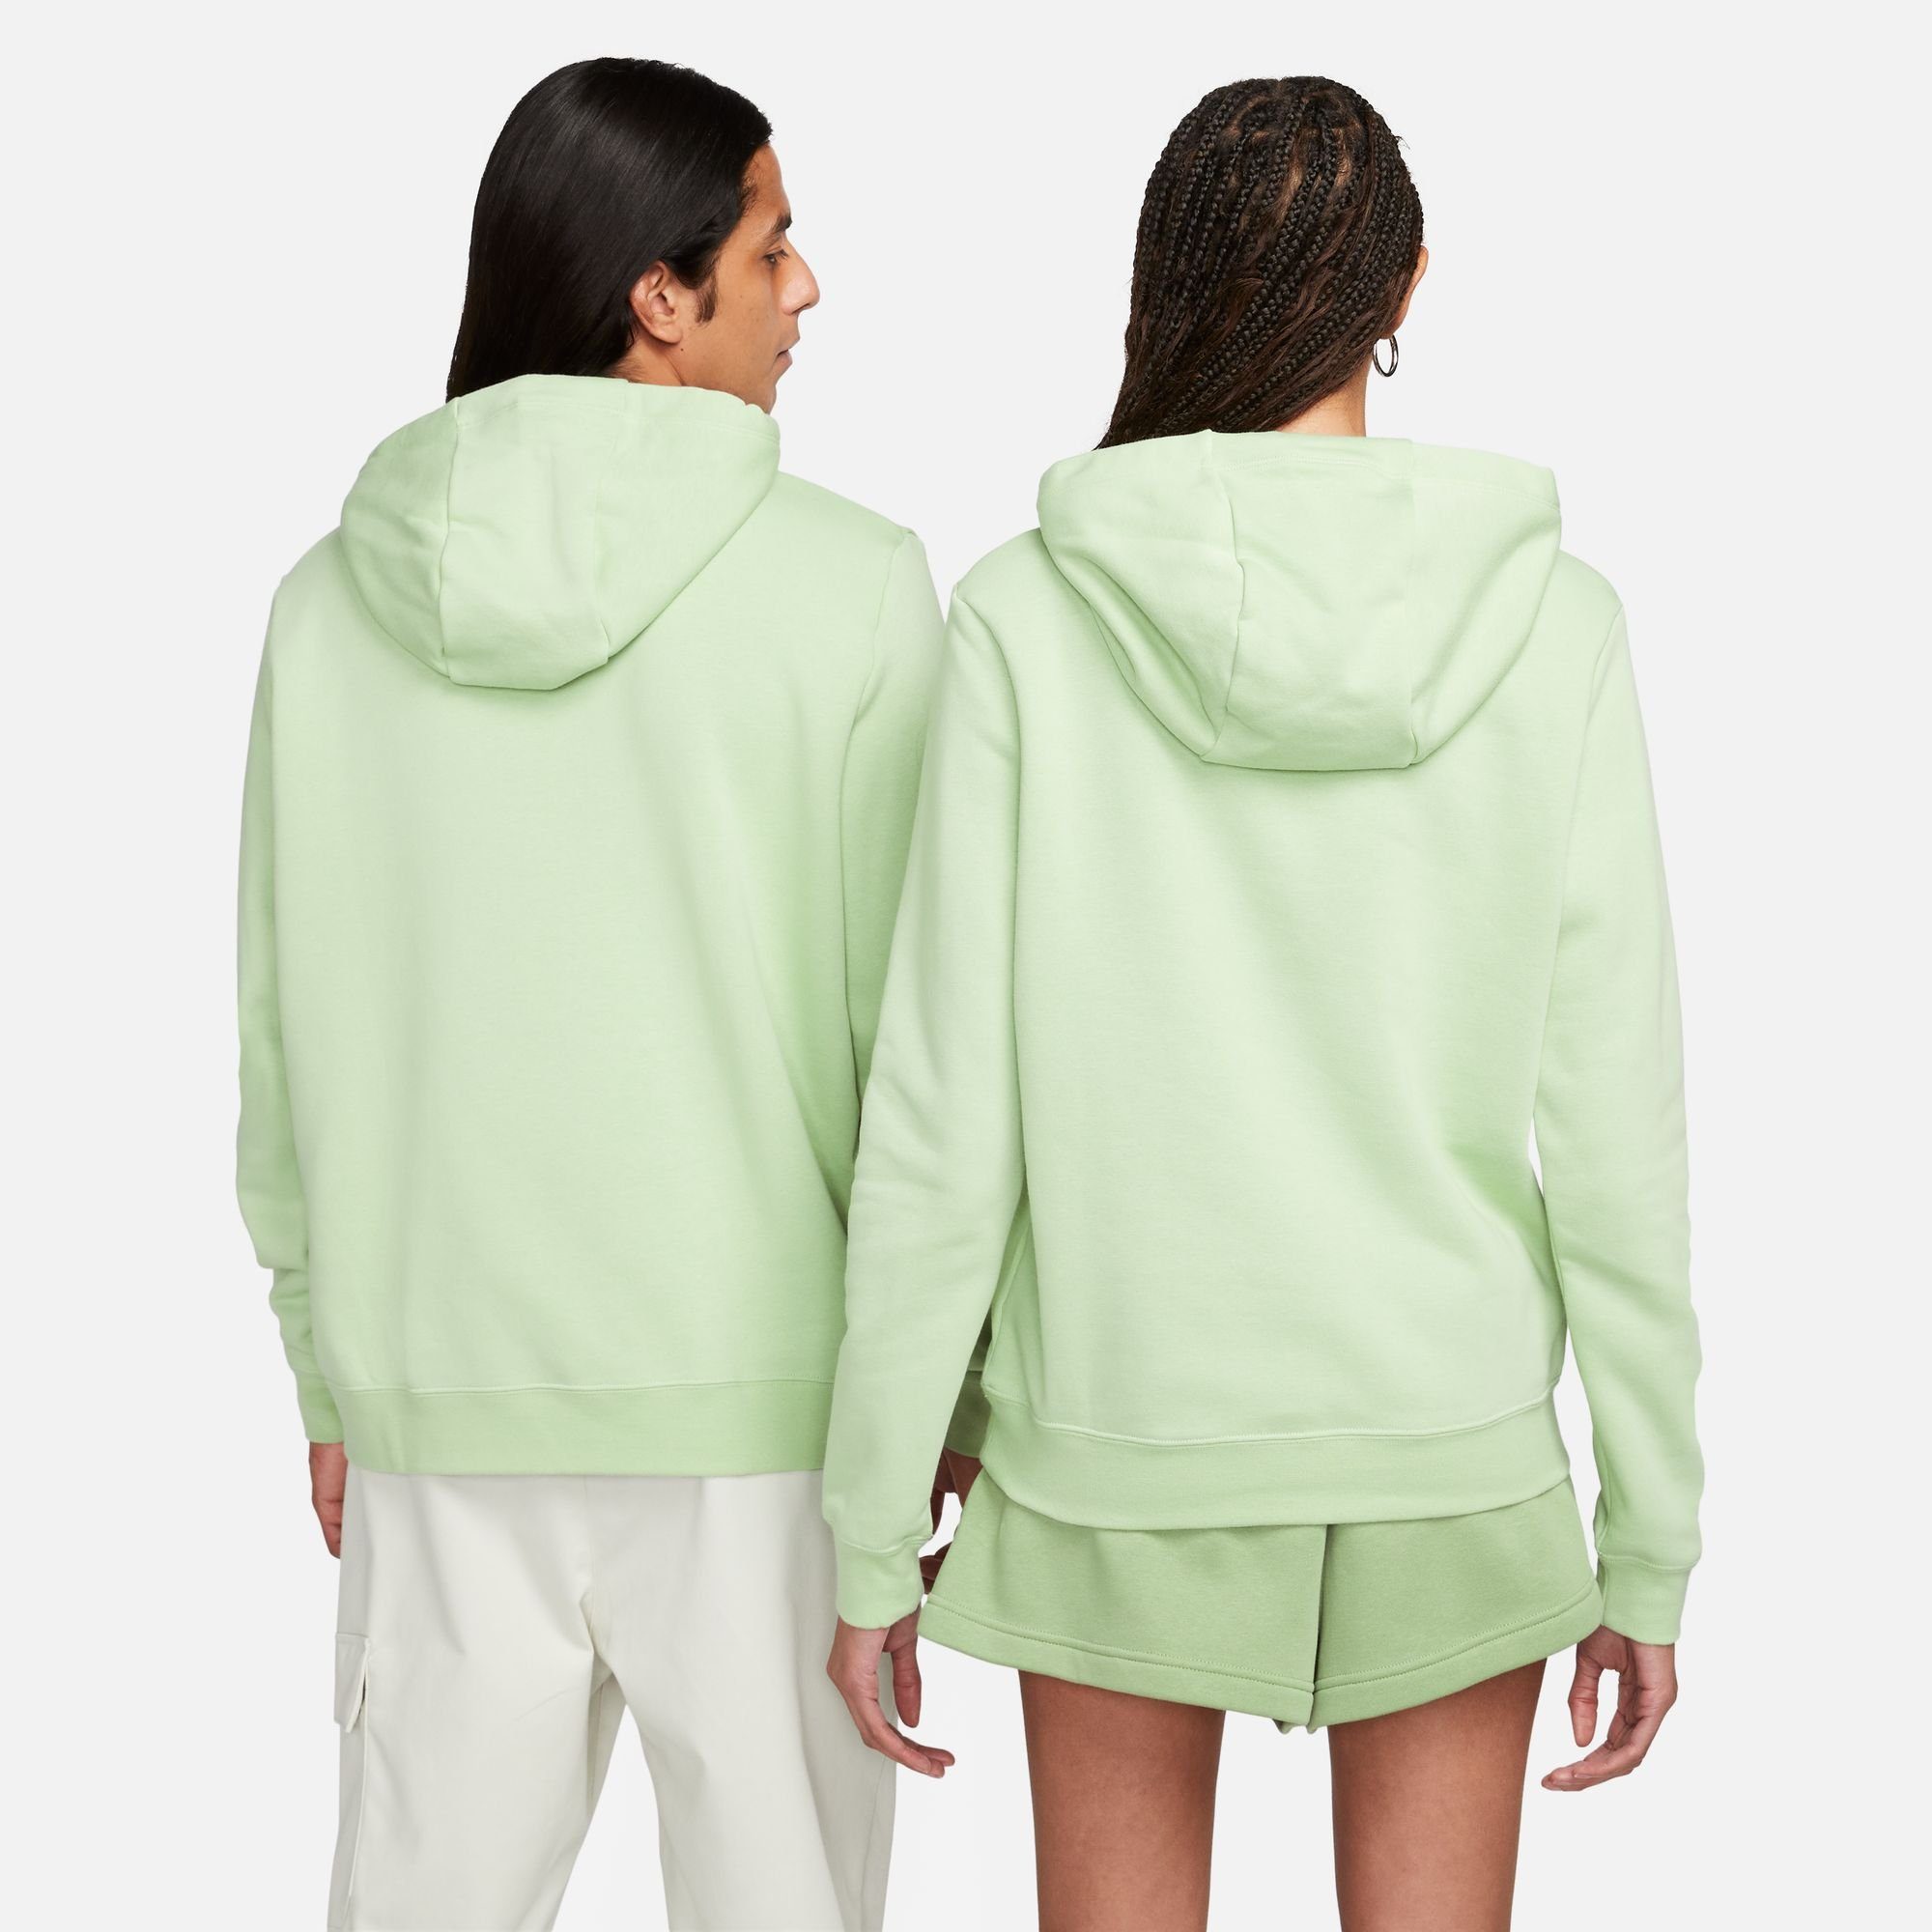 HONEYDEW/WHITE Women's Logo Nike Kapuzensweatshirt Pullover Fleece Sportswear Club Hoodie